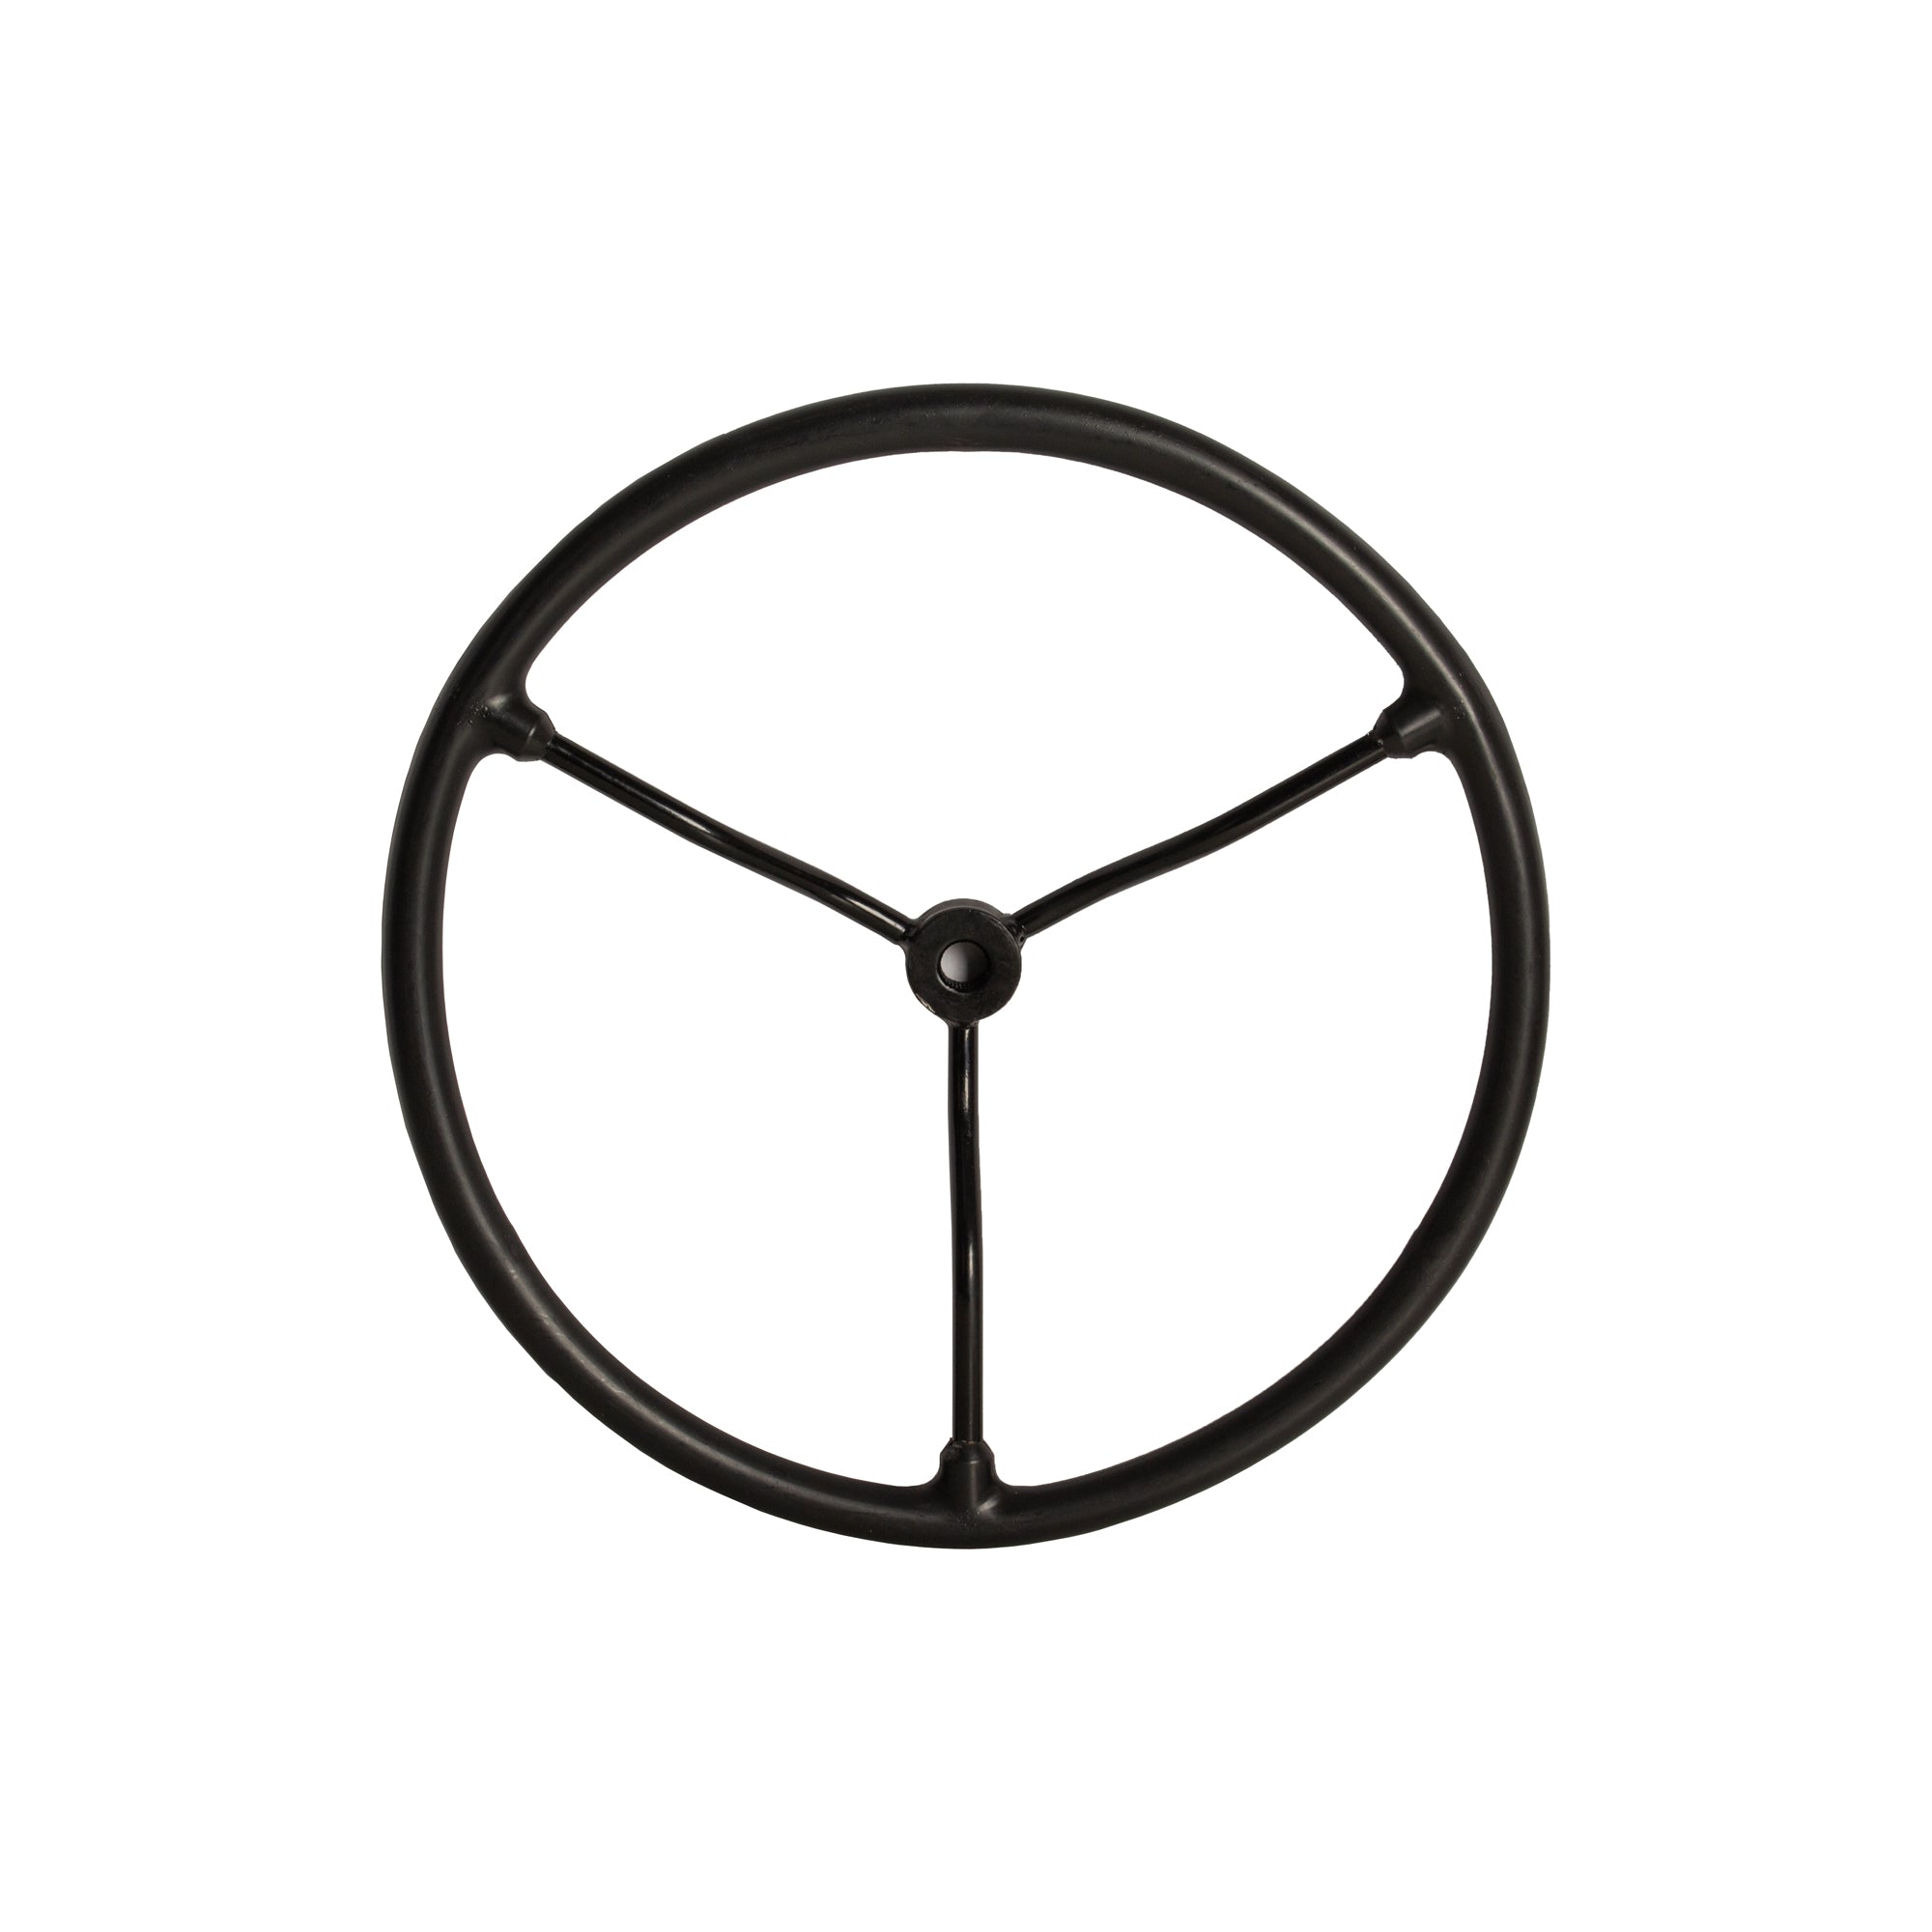 Black Steering Wheel Replacement For FORD 8N NAA 501 600 601 800 900 8N3600